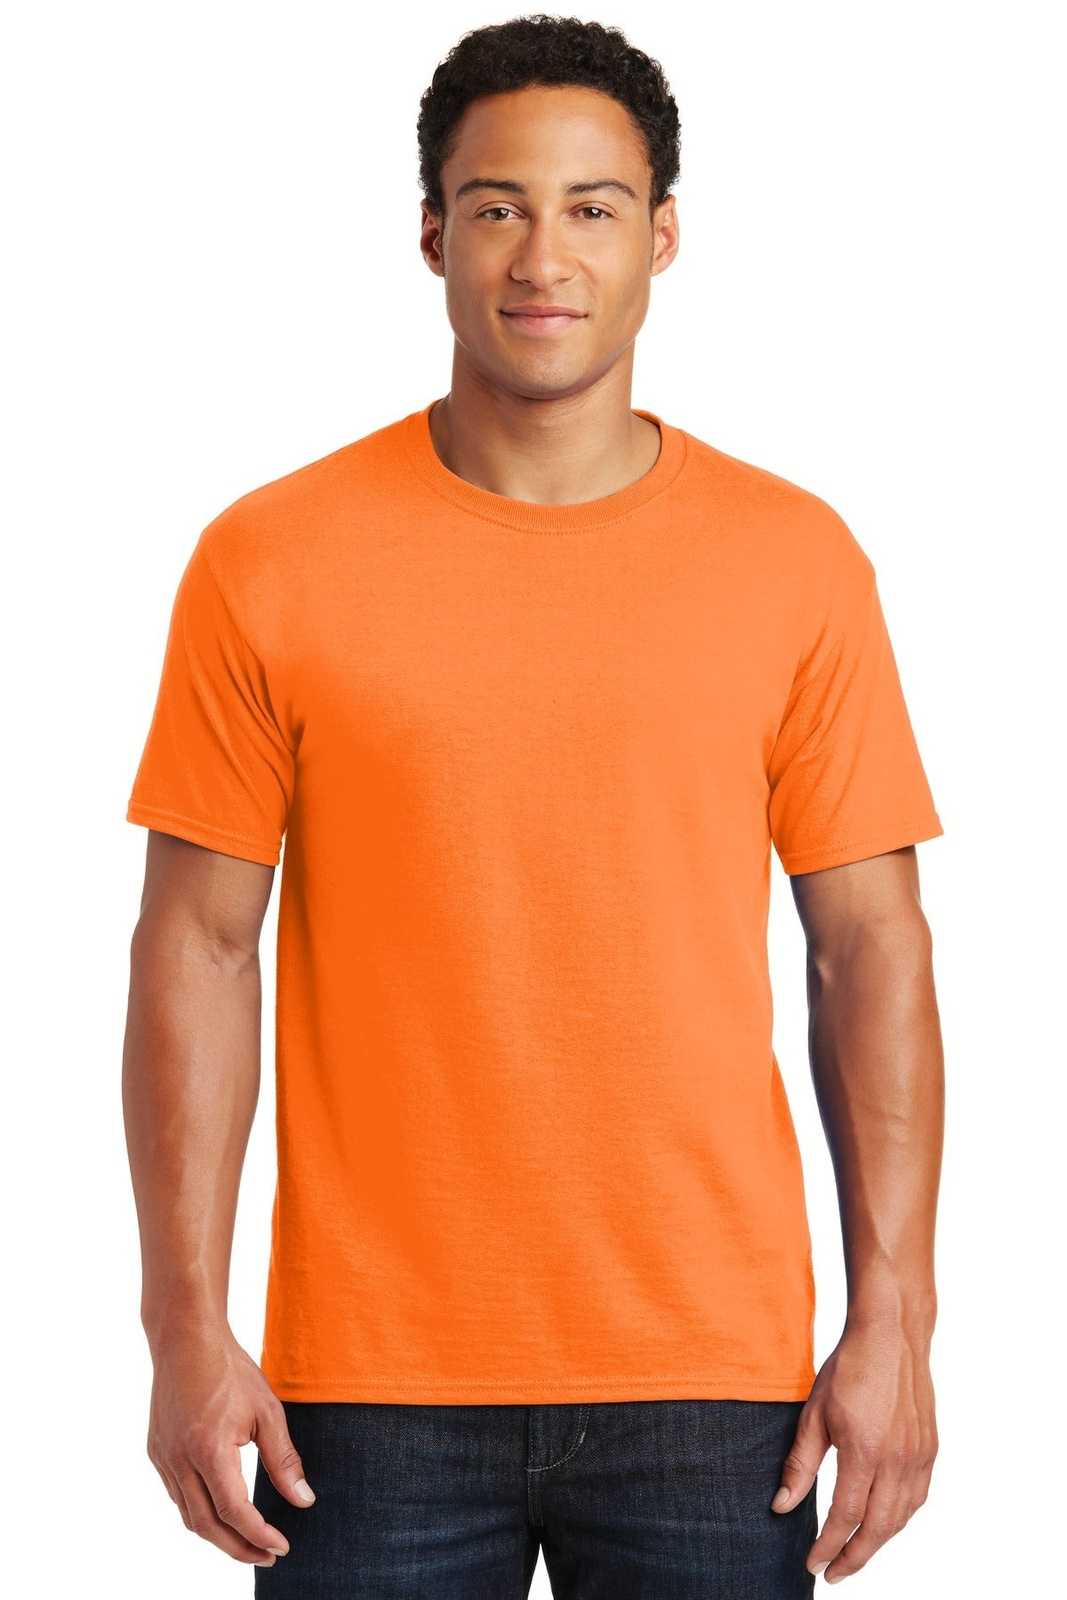 Jerzees 29M Dri-Power Active 50/50 Cotton/Poly T-Shirt - Safety Orange - HIT a Double